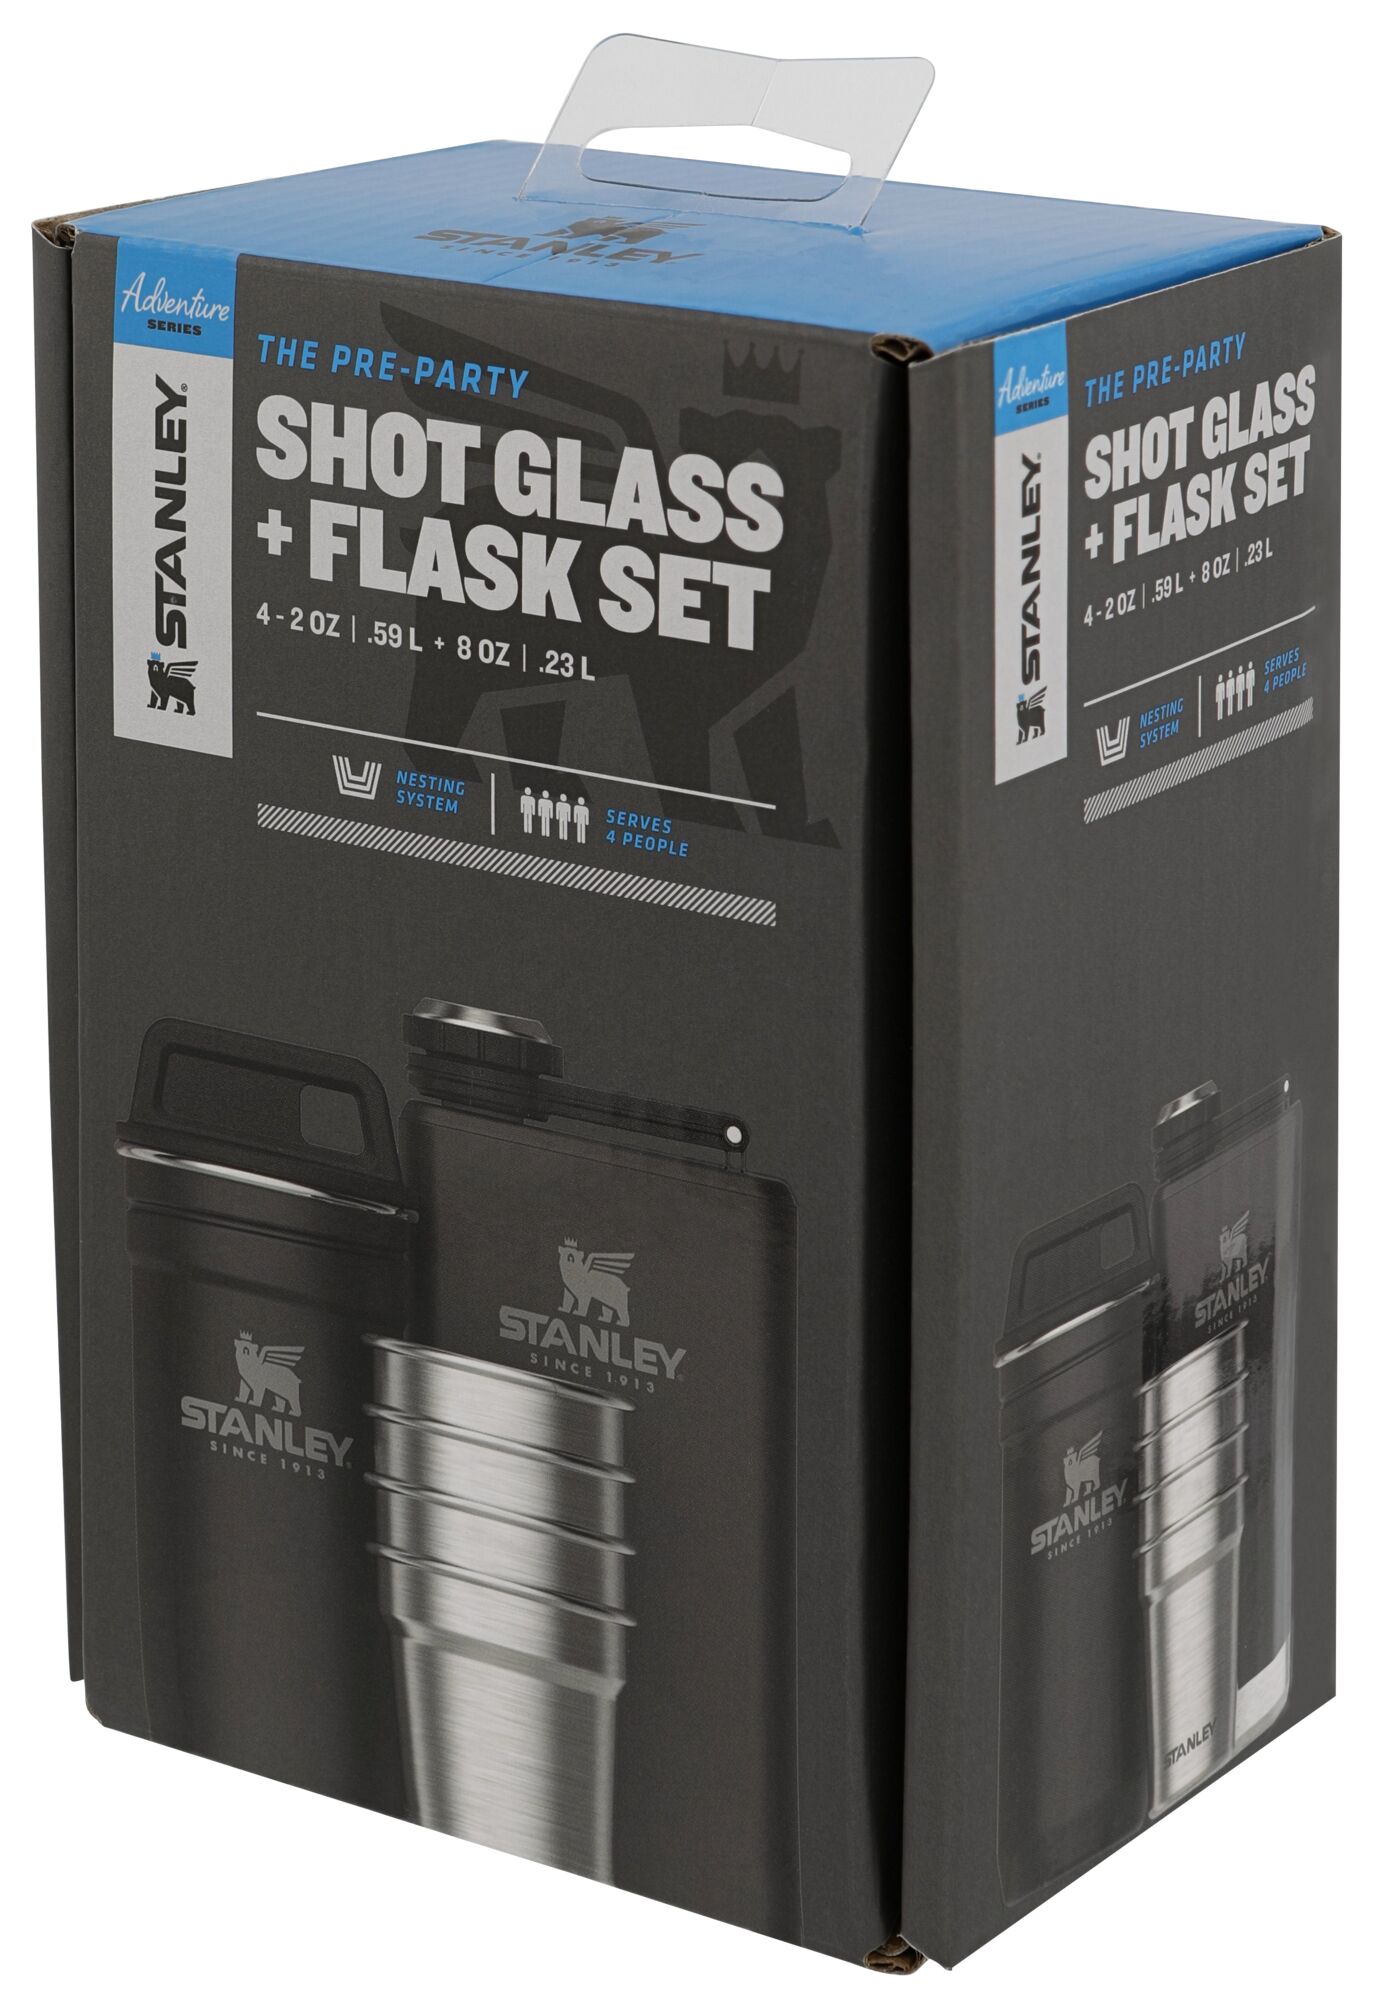 The Pre-Party Shotglass + Flask Set